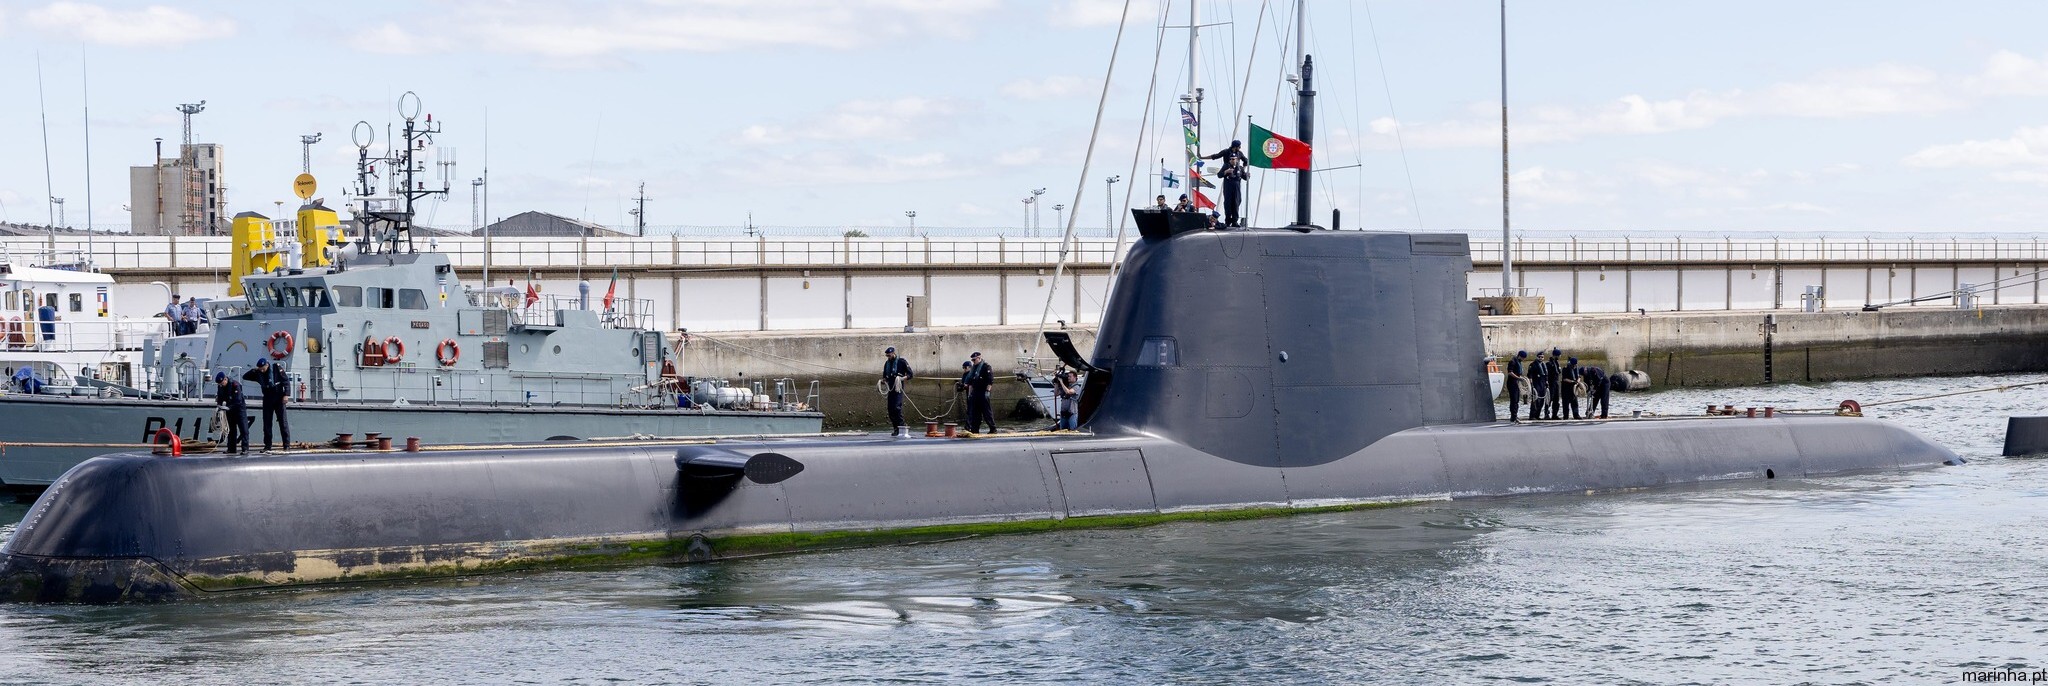 s-161 nrp arpao tridente class type 209pn attack submarine ssk aip portuguese navy marinha 03